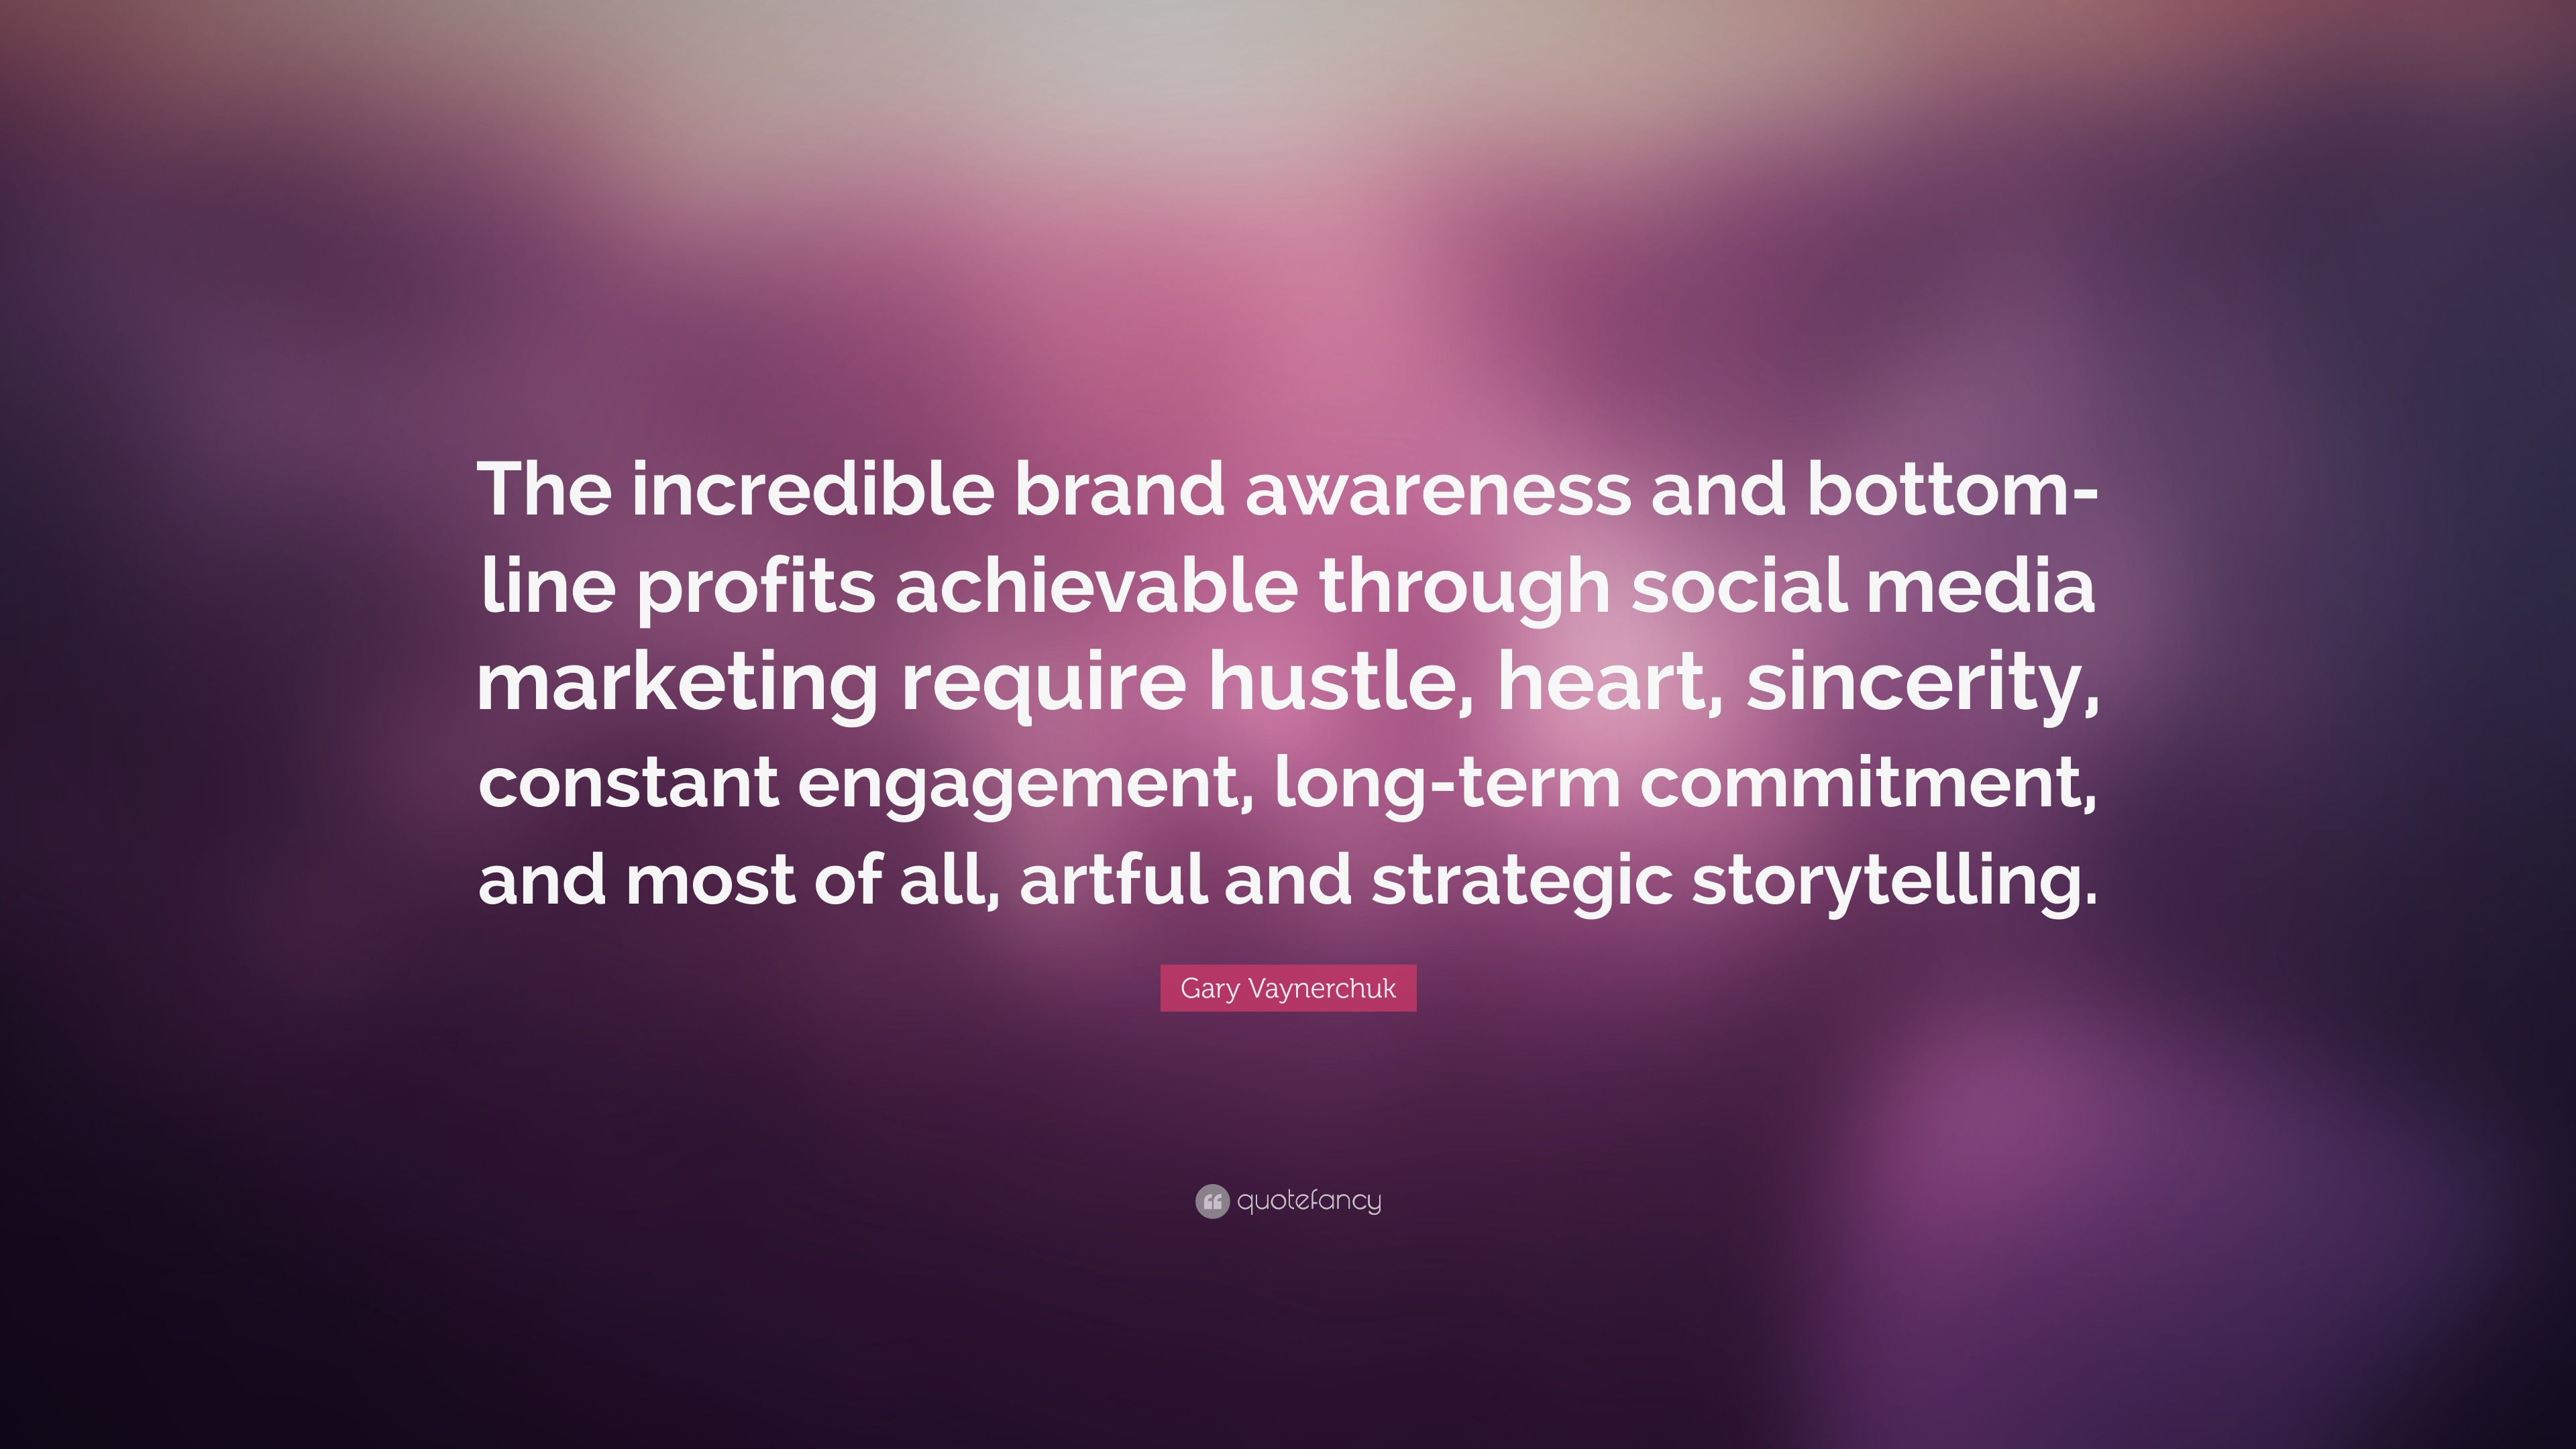 Gary Vaynerchuk Quote: “The incredible brand awareness and bottom-line ...